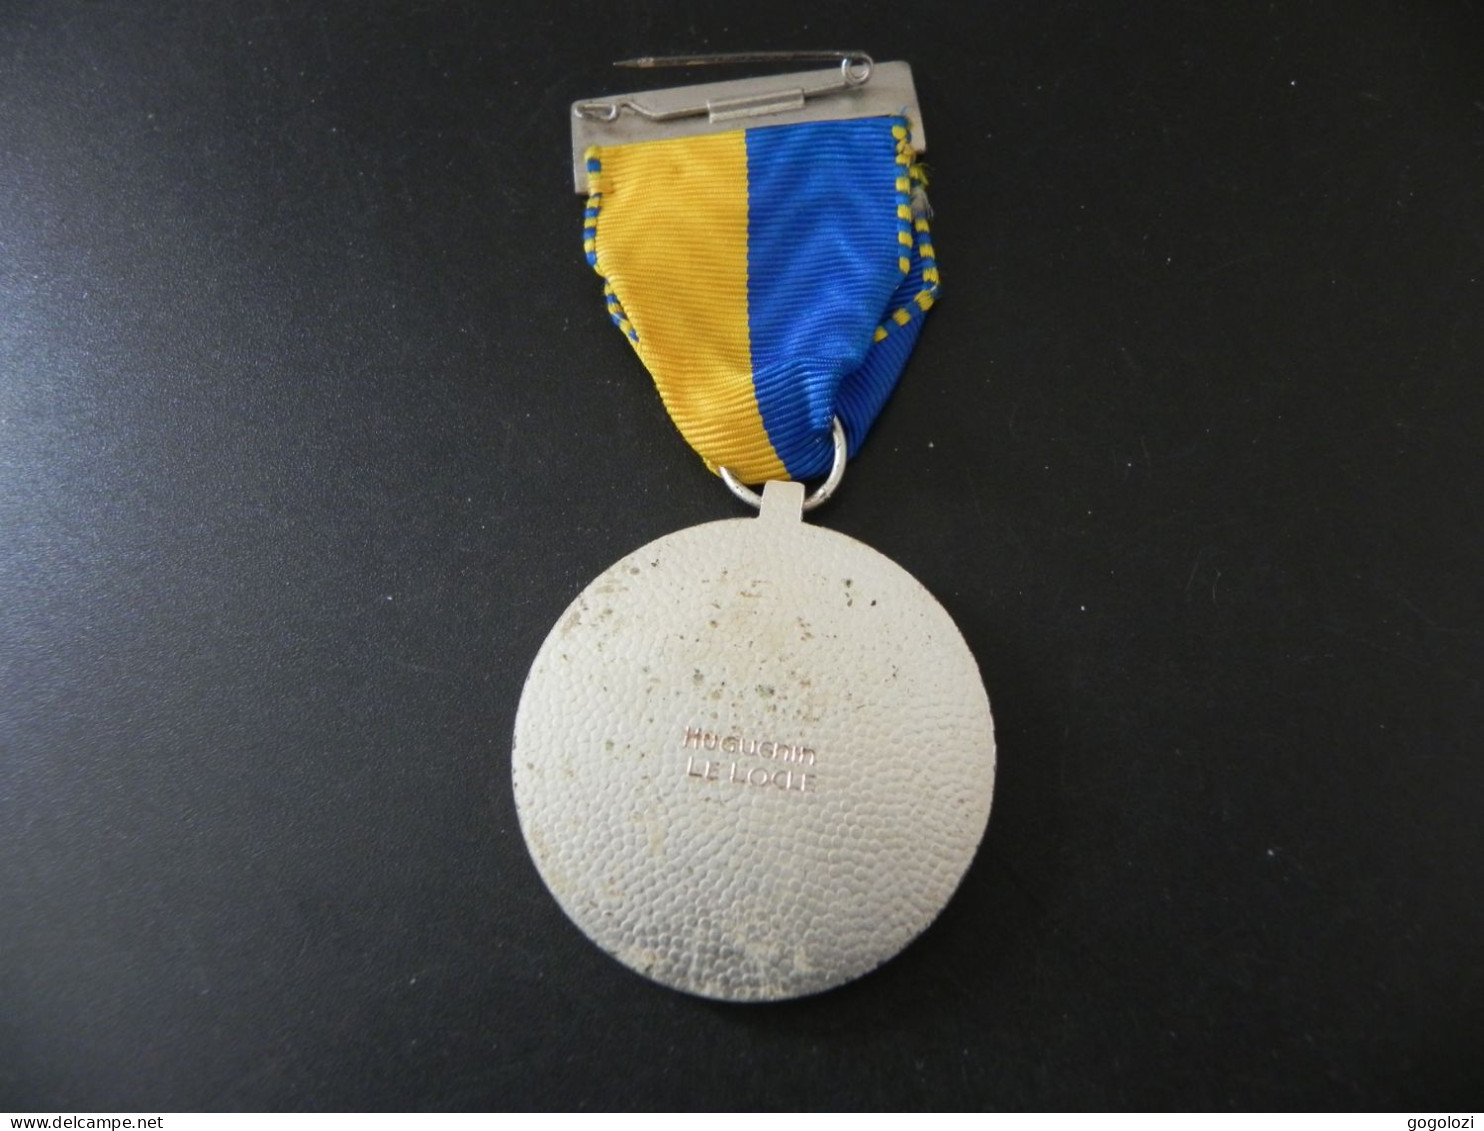 Shooting Medal - Medaille Schweiz Suisse Switzerland - Jubiläumsschiessen Worben 1961 - Sin Clasificación